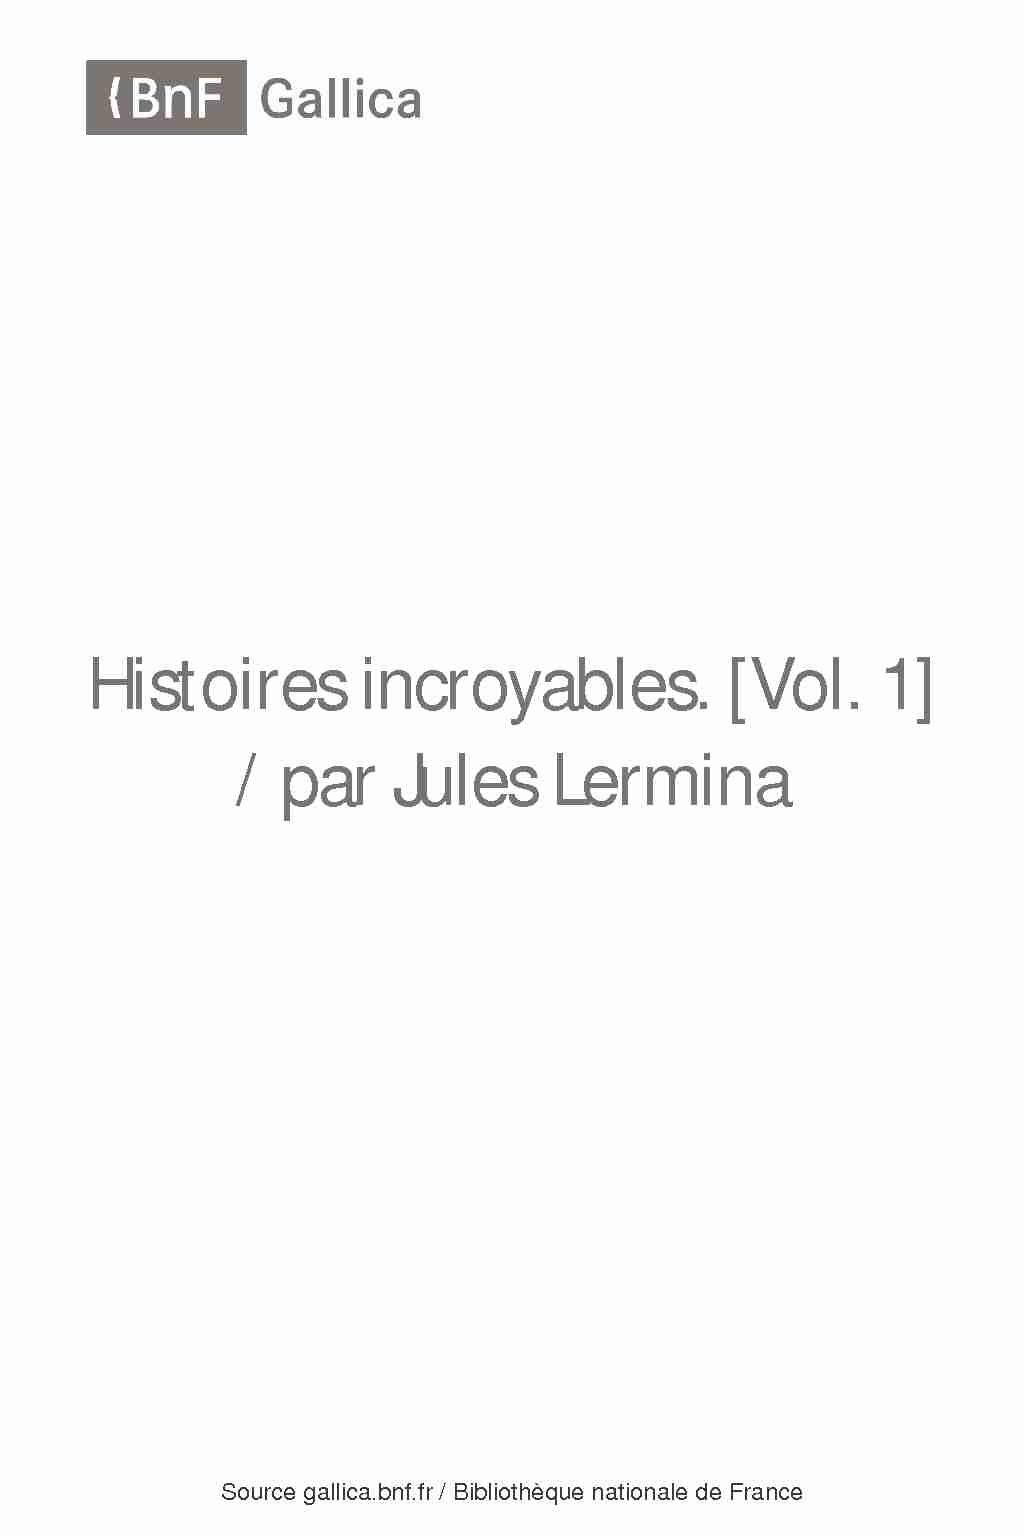 [PDF] Histoires incroyables [Vol 1] / par Jules Lermina - Gallica